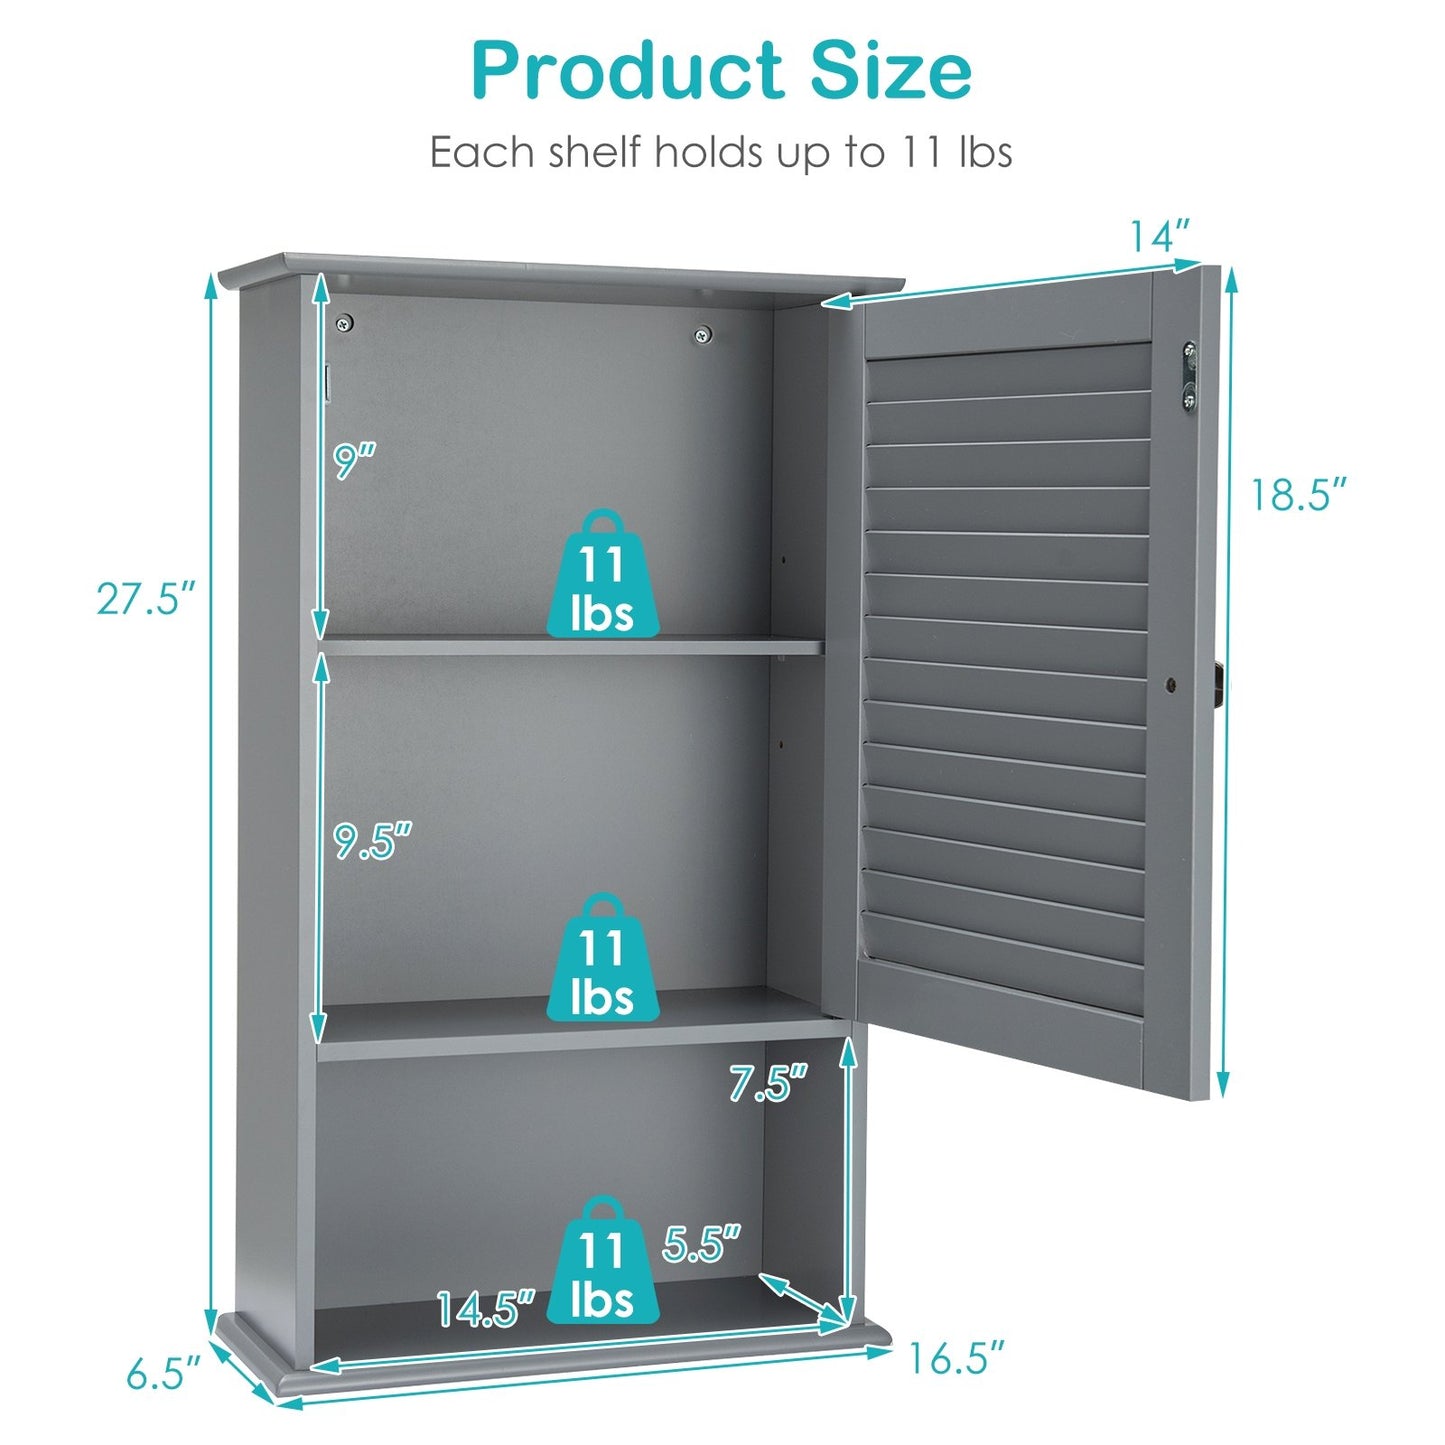 Bathroom Wall Mount Storage Cabinet Single Door with Height Adjustable Shelf, Gray at Gallery Canada